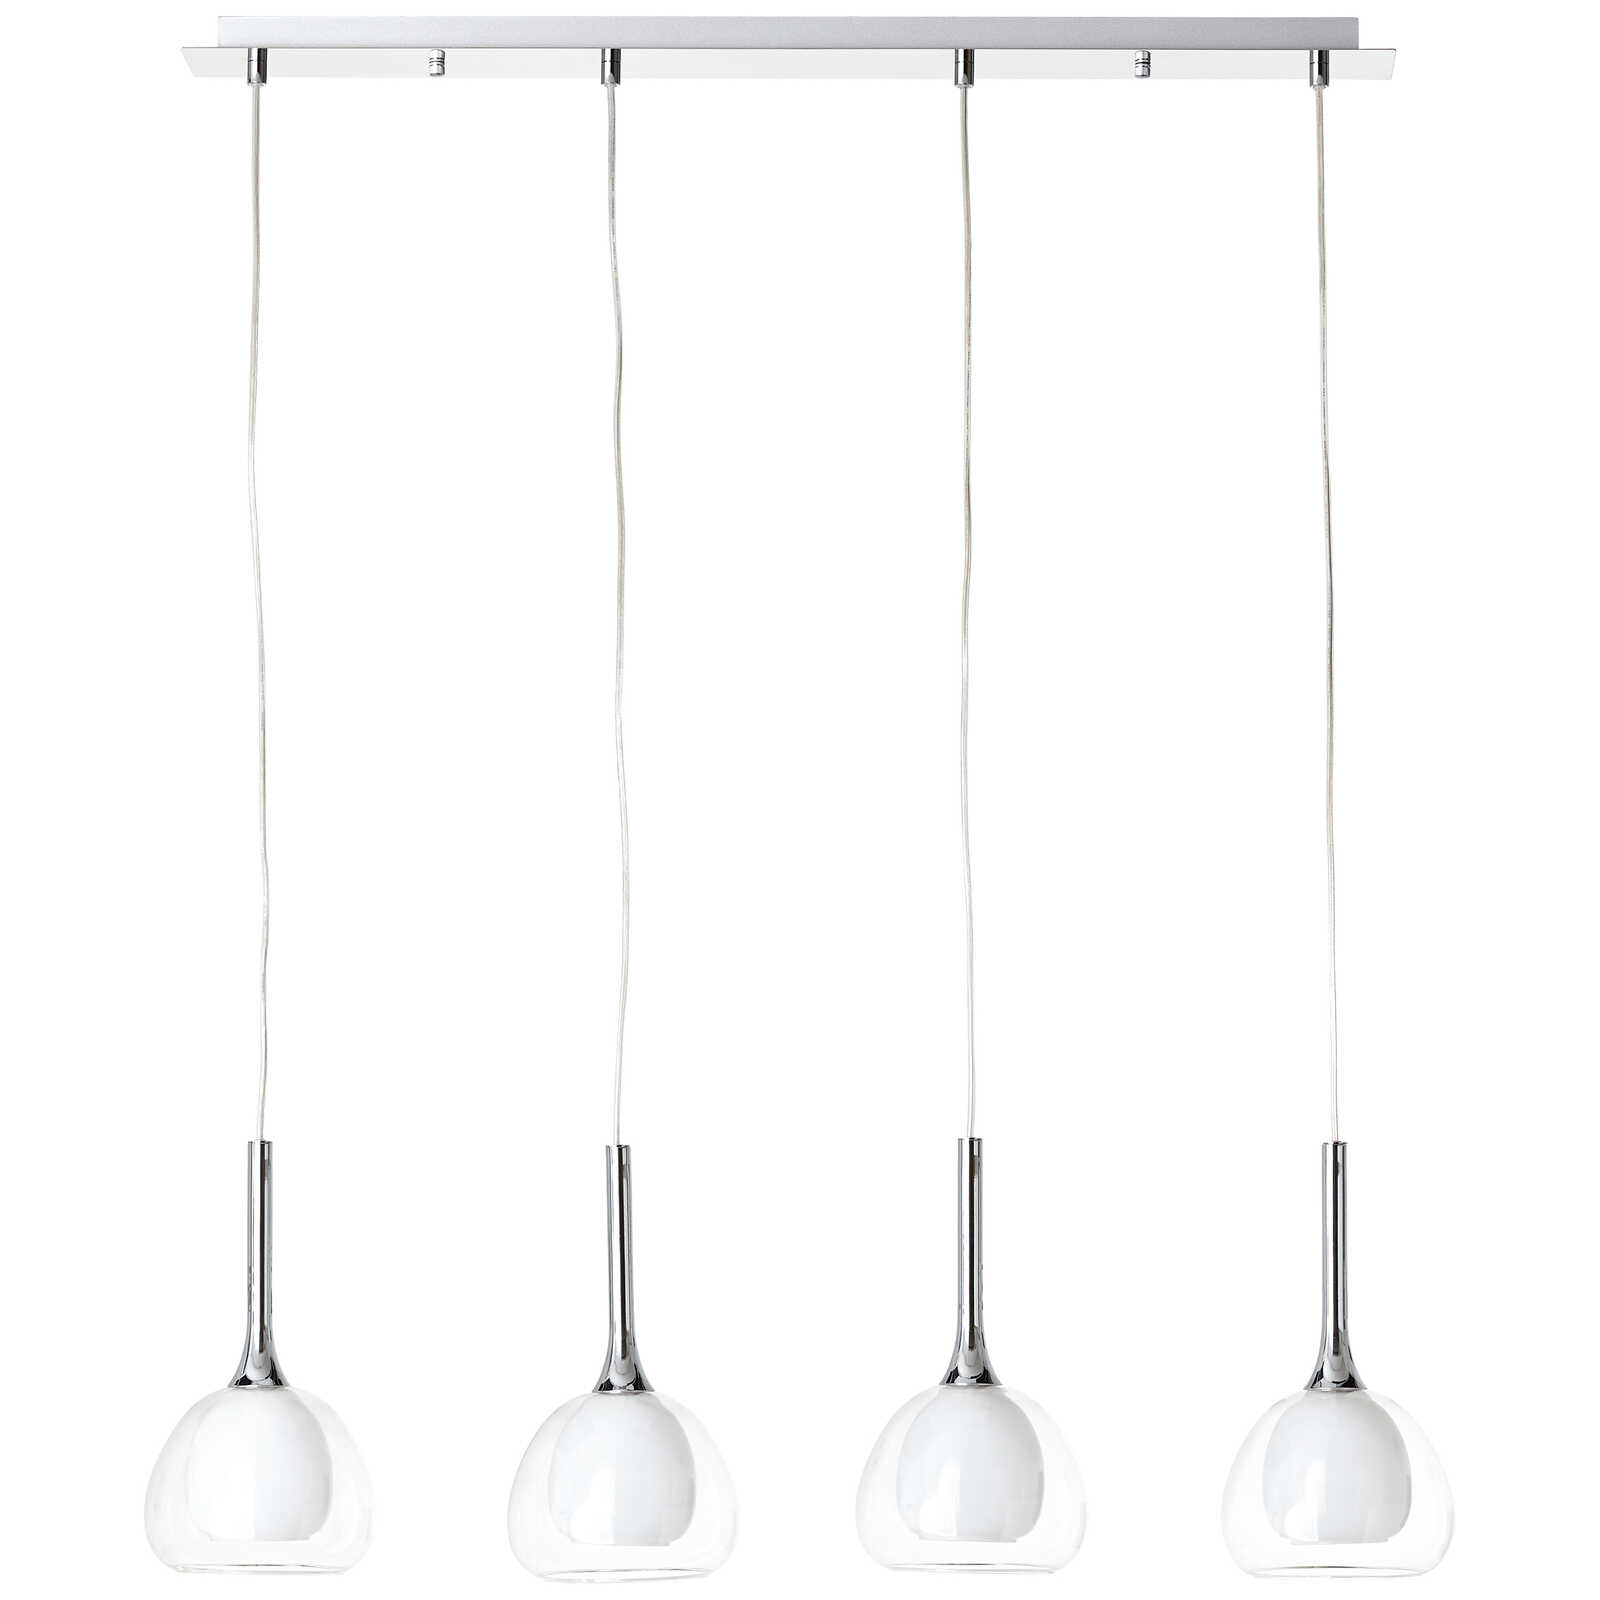             Glazen hanglamp - Iris 4 - Metallic
        